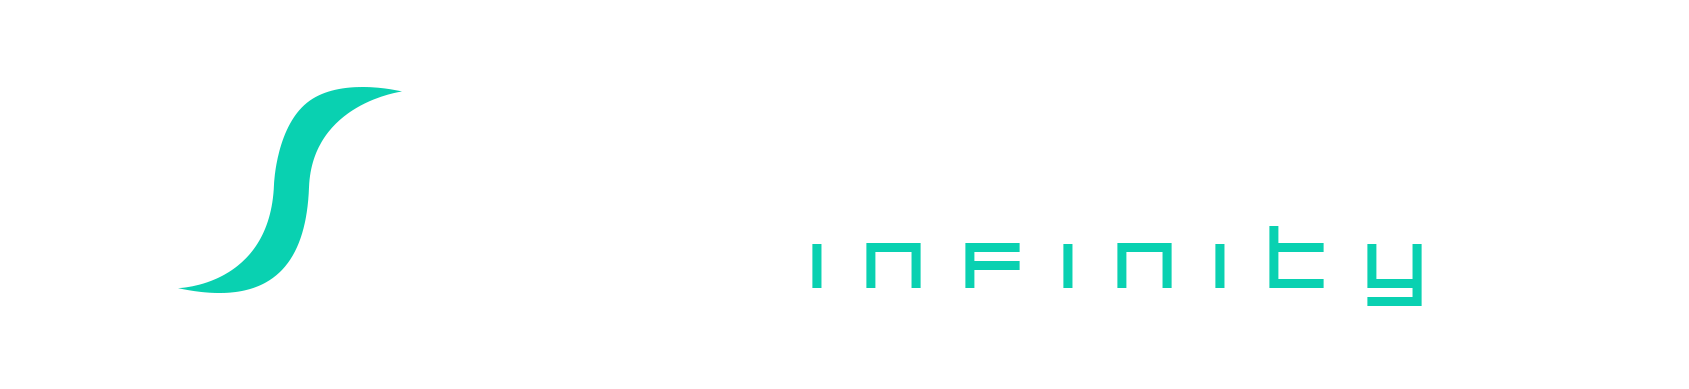 Project Infinity - Best CSGO Hacks & Undetected Free CSGO Cheats